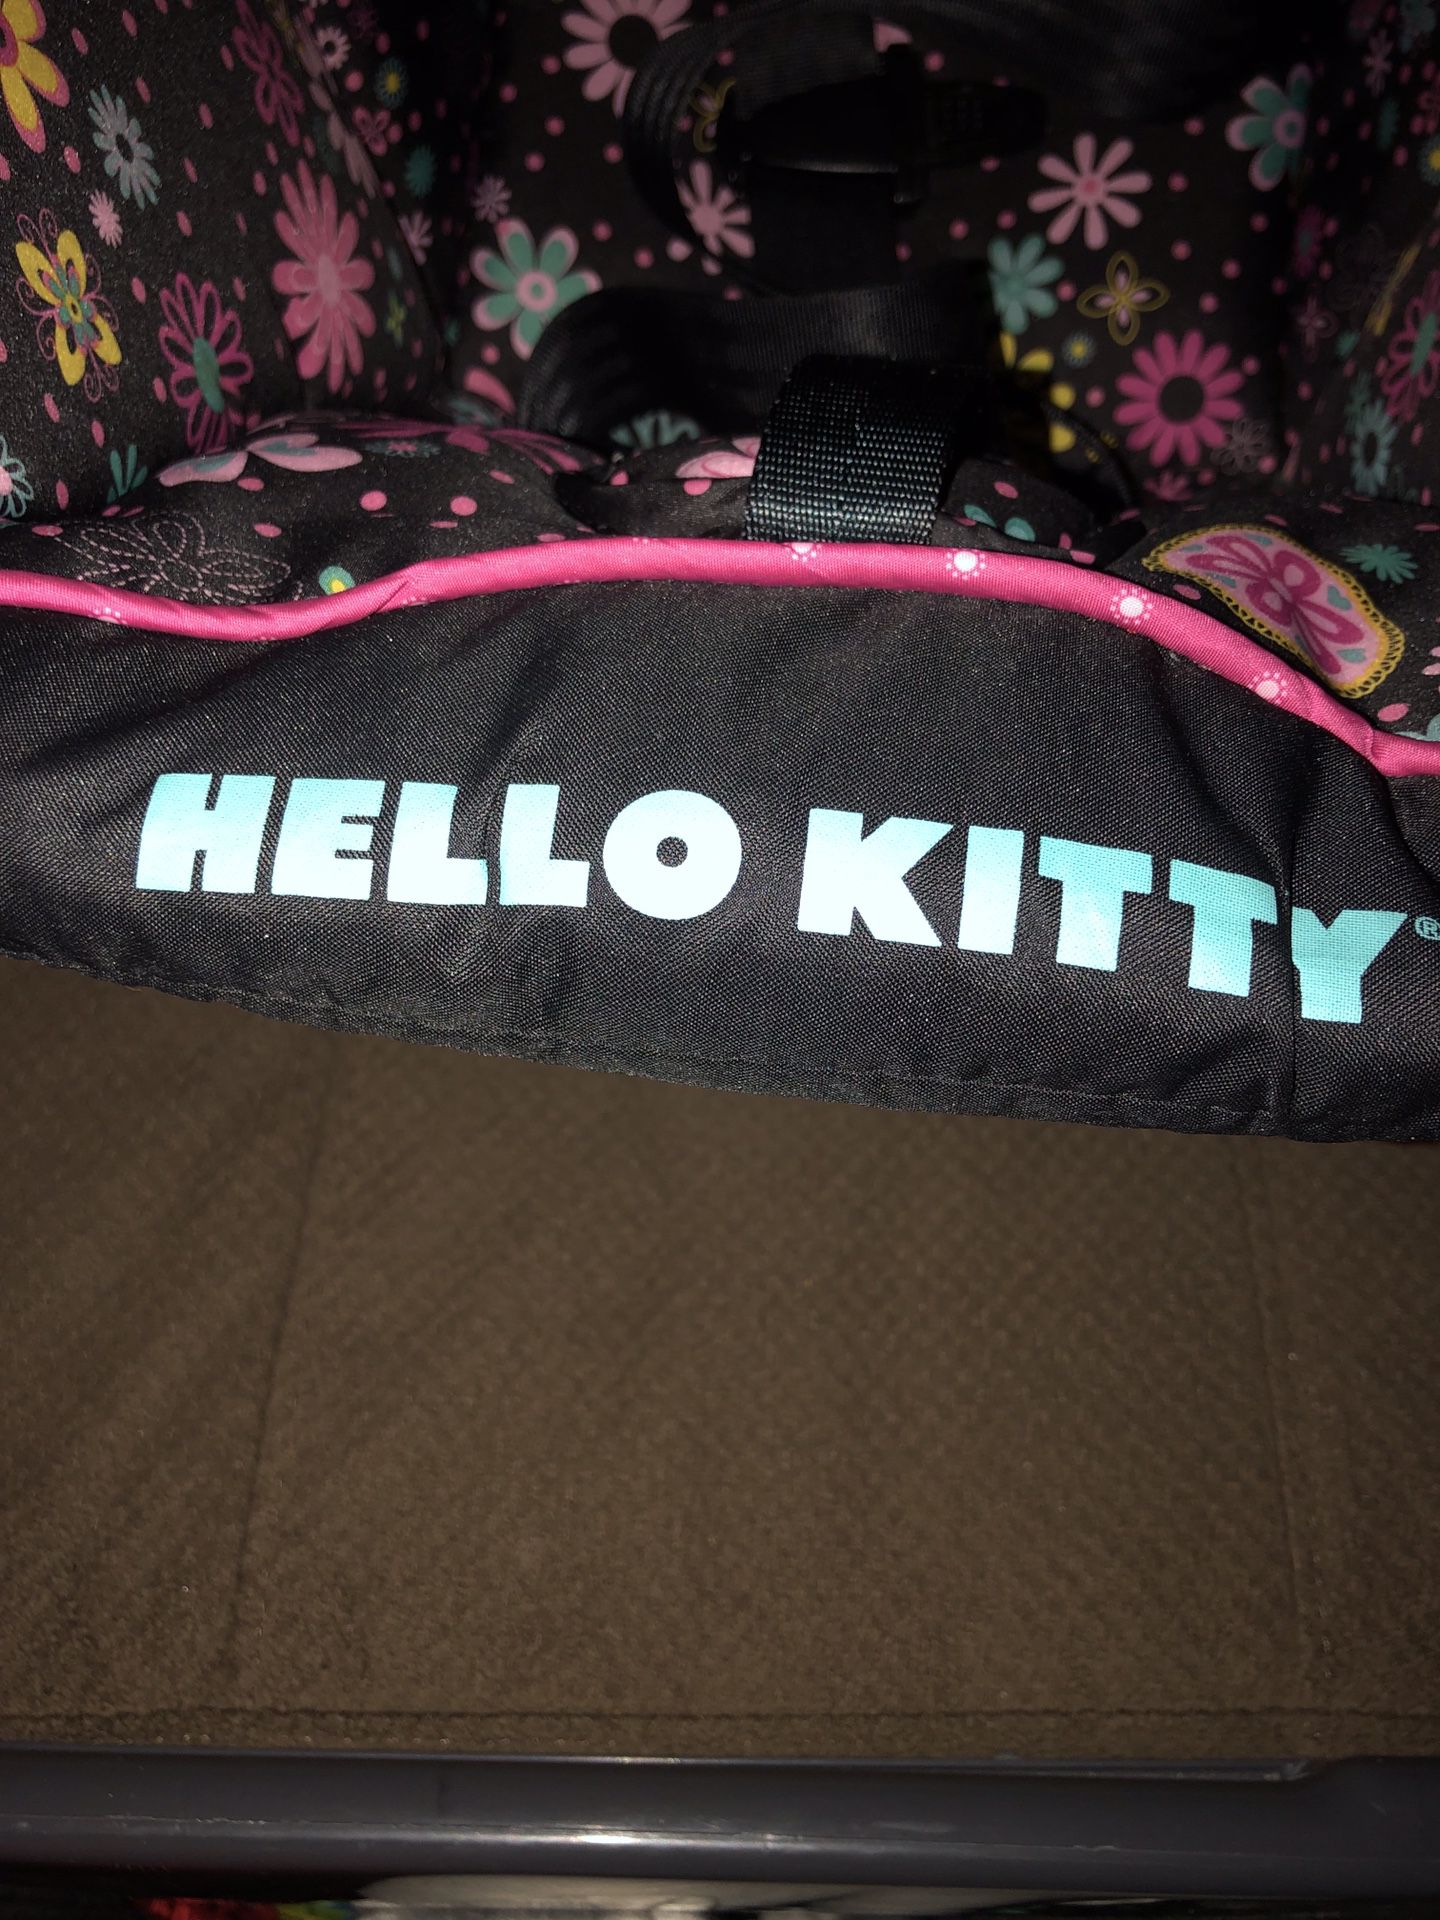 Hello Kitty stroller system